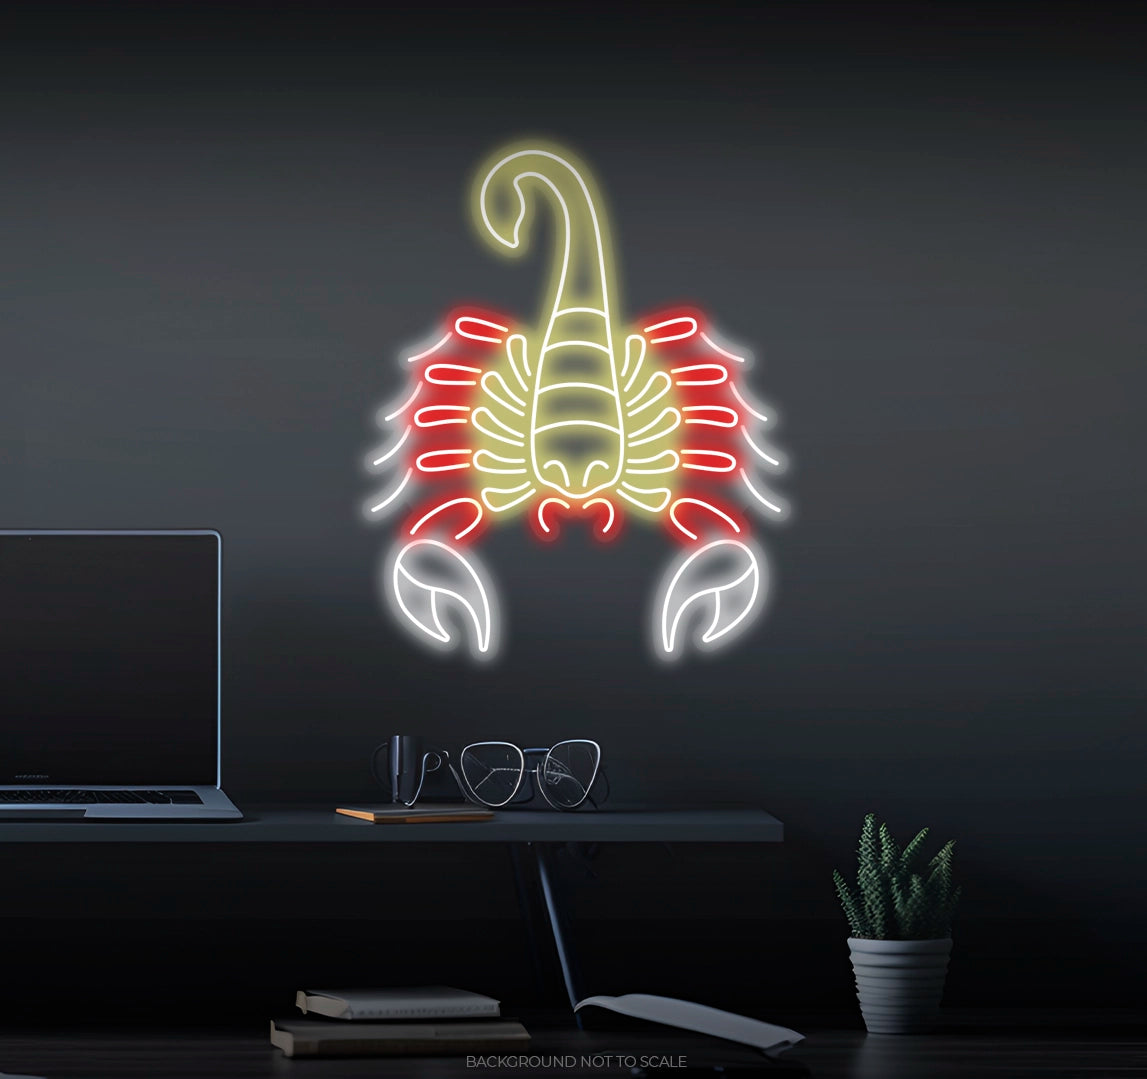 Scorpion LED neon